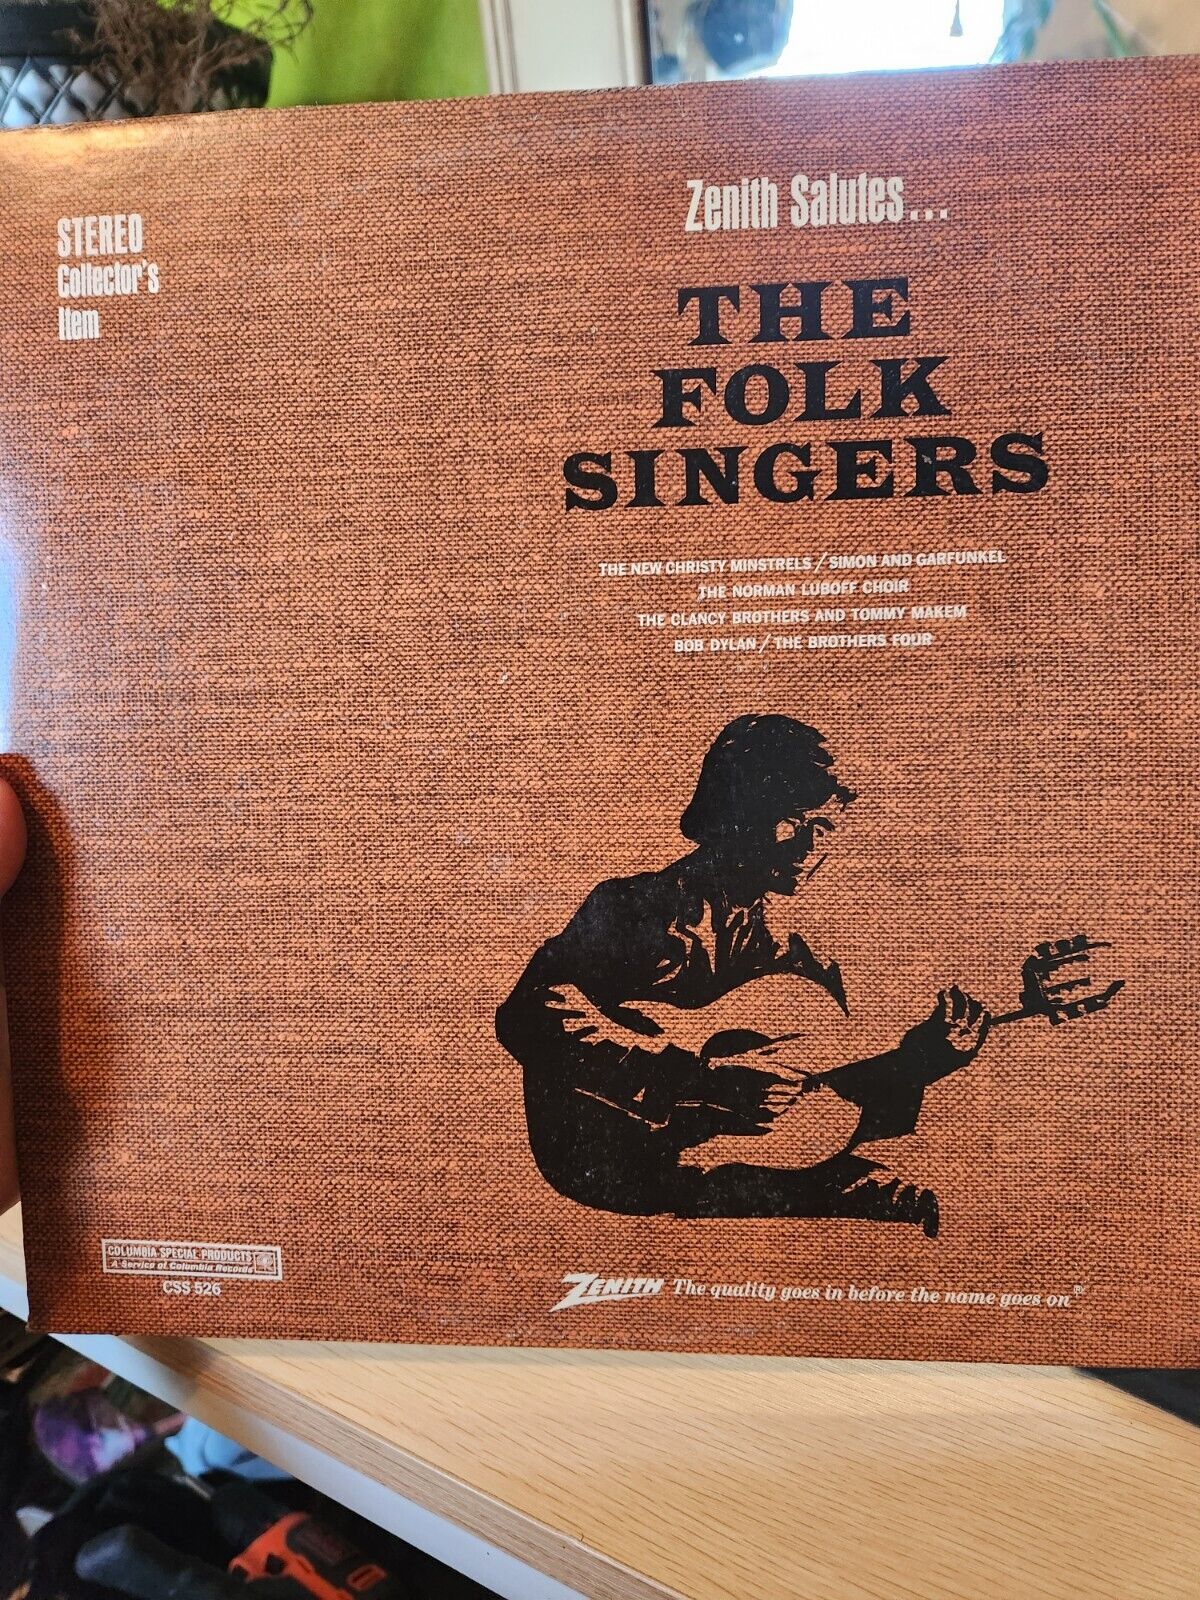  Zenith Salutes The Folk Singers Vinyl LP Columbia Record CSS526 Collectors Item